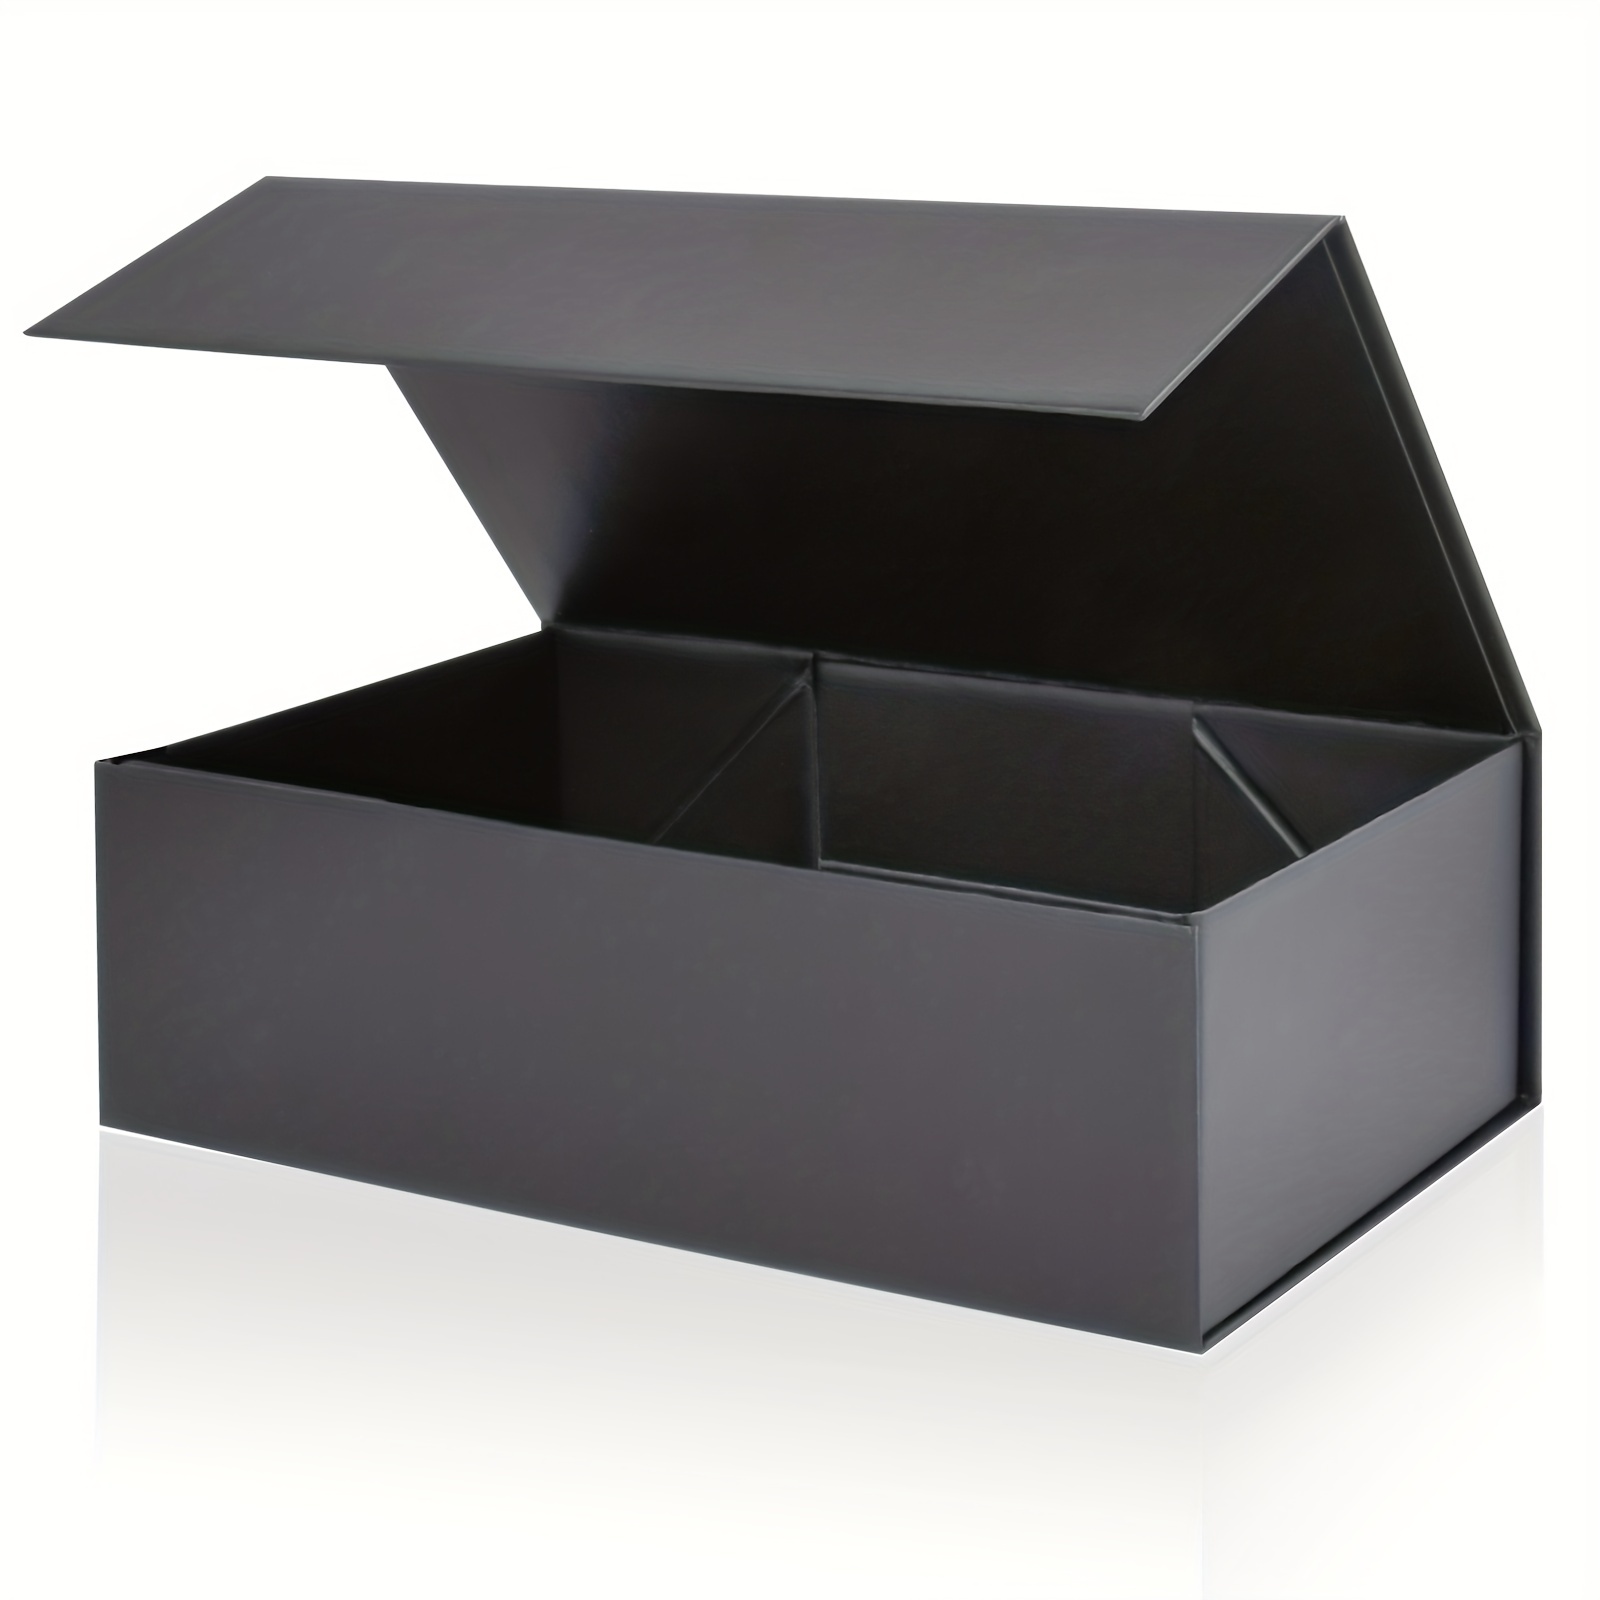 Caja de Regalo con tapas,sorpresa Caja decorativa reutilizable con